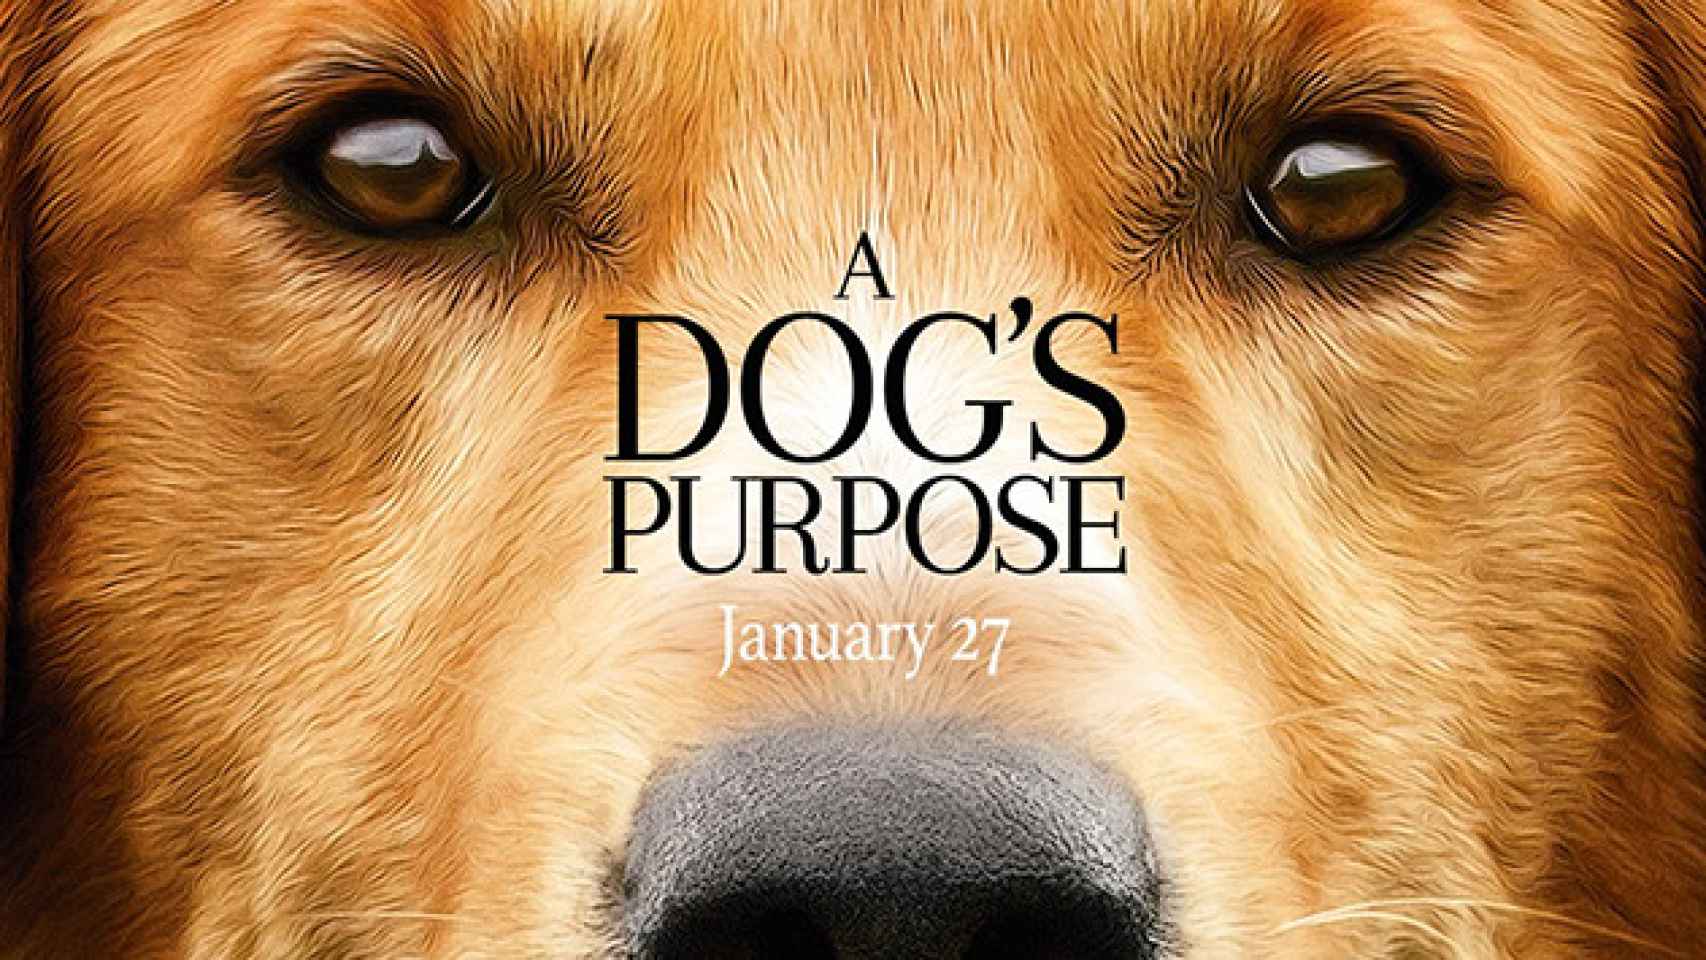 Cartel de 'A Dog's Purpose' / CG